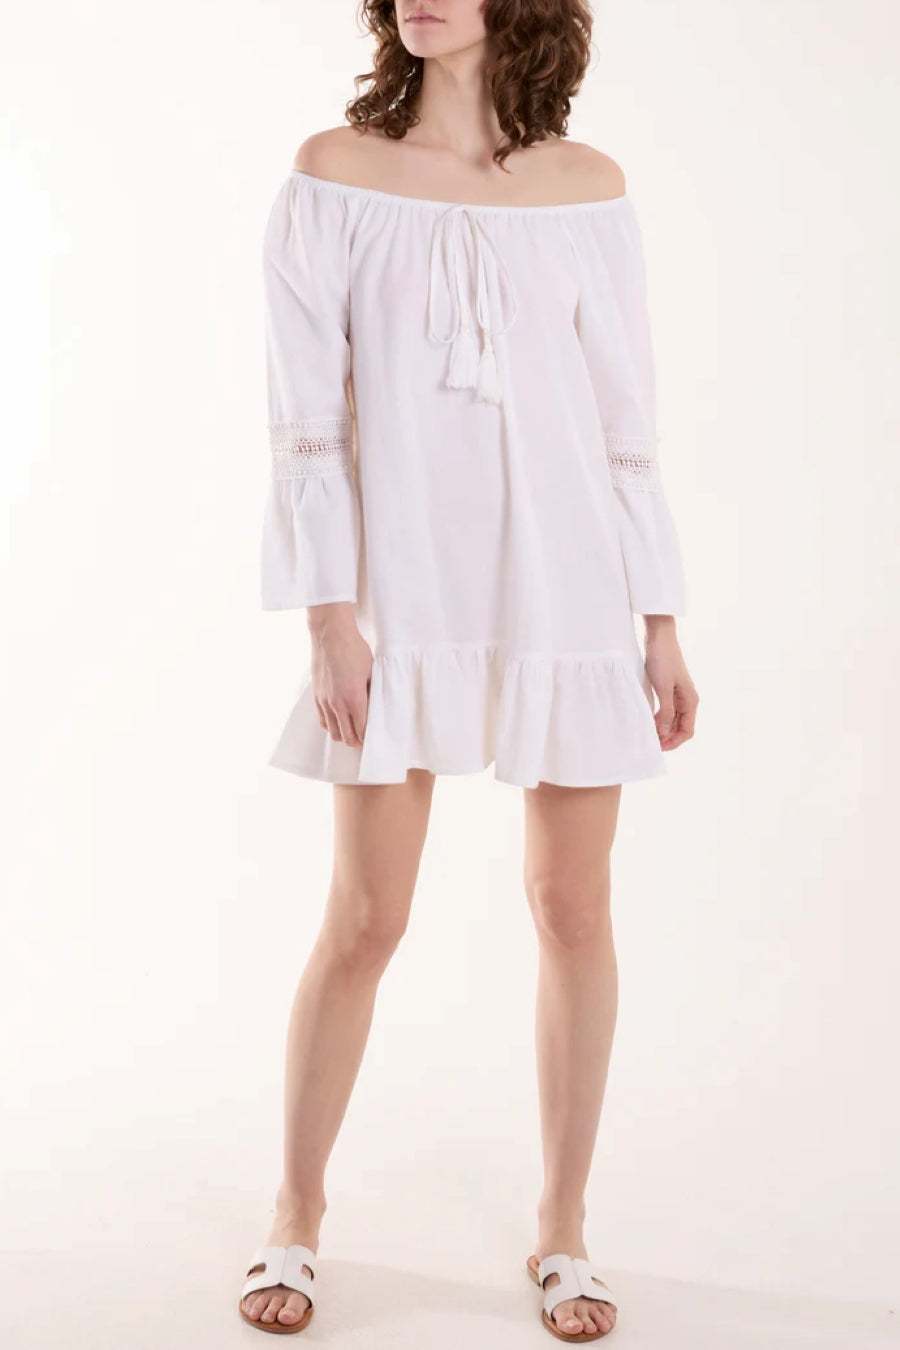 White Lace Trim Bardot Mini Tunic Dress